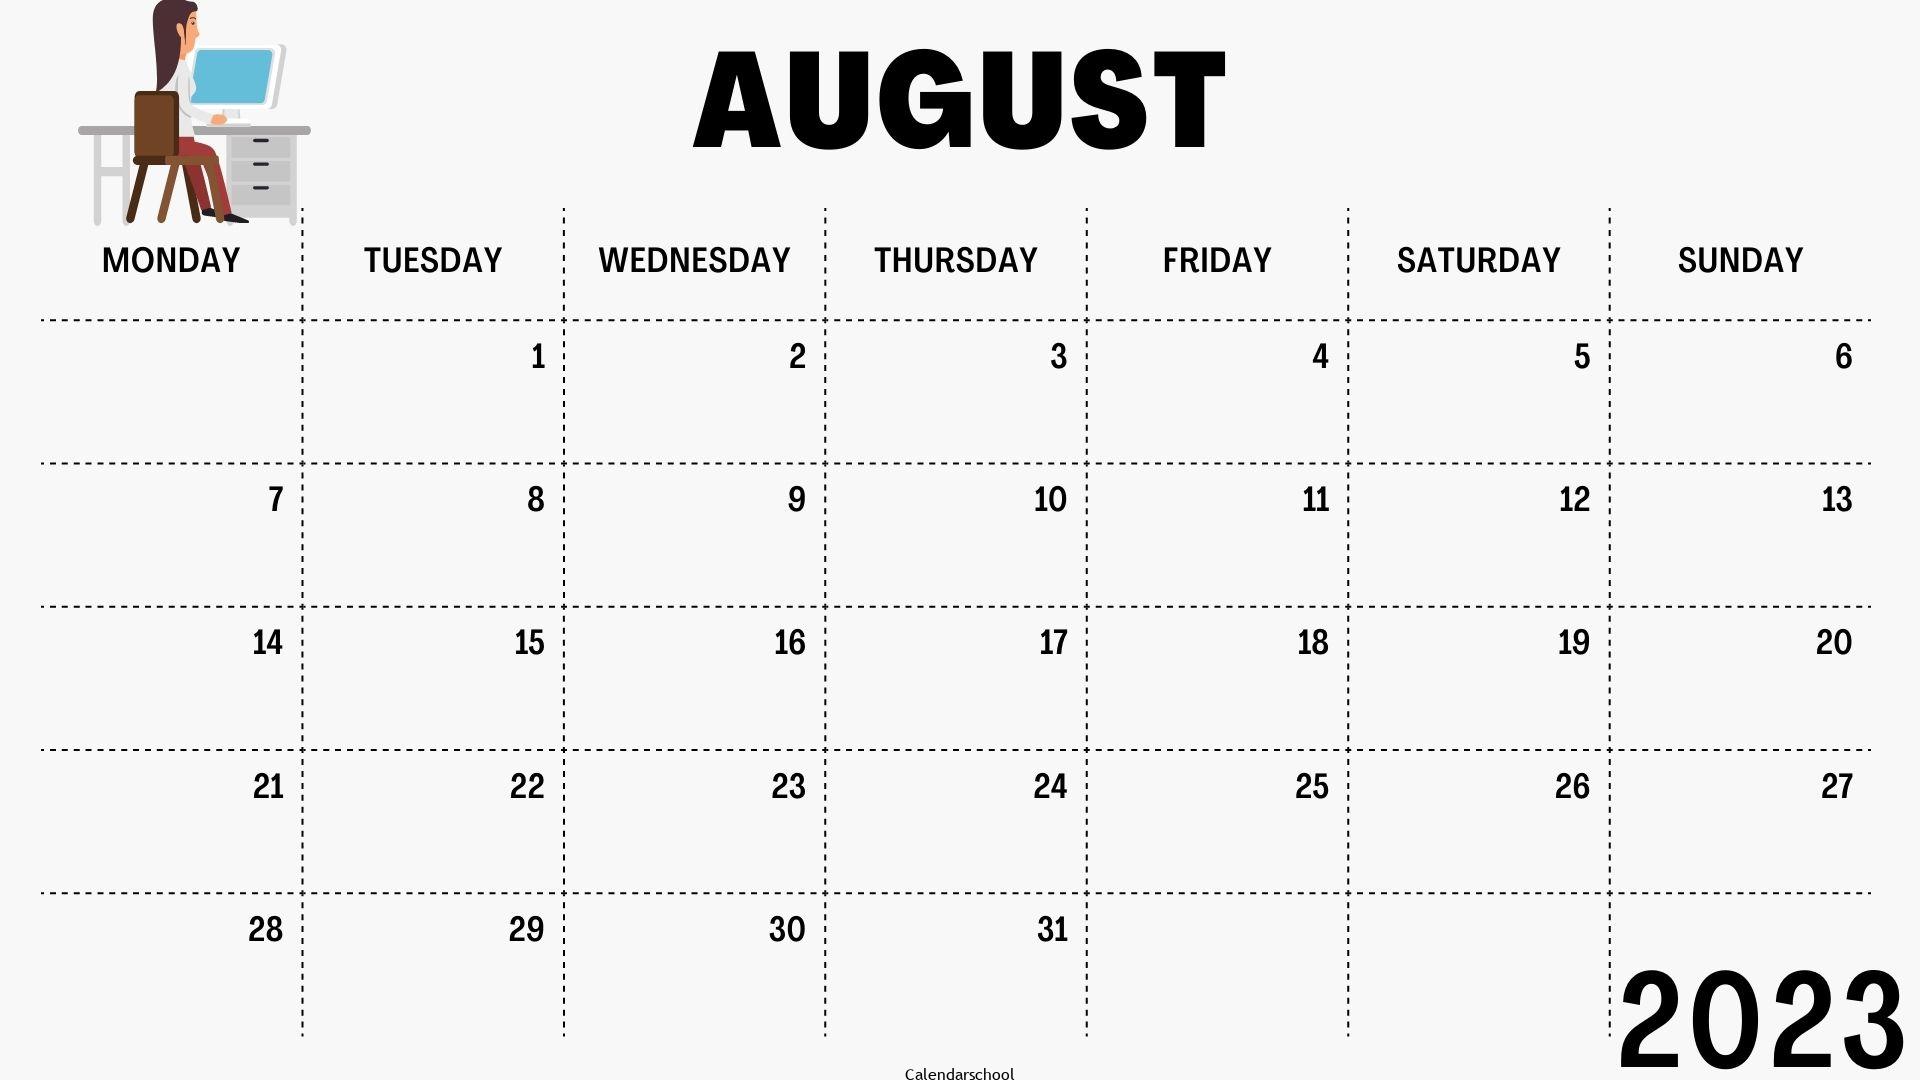 August 2023 Monthly Calendar Template